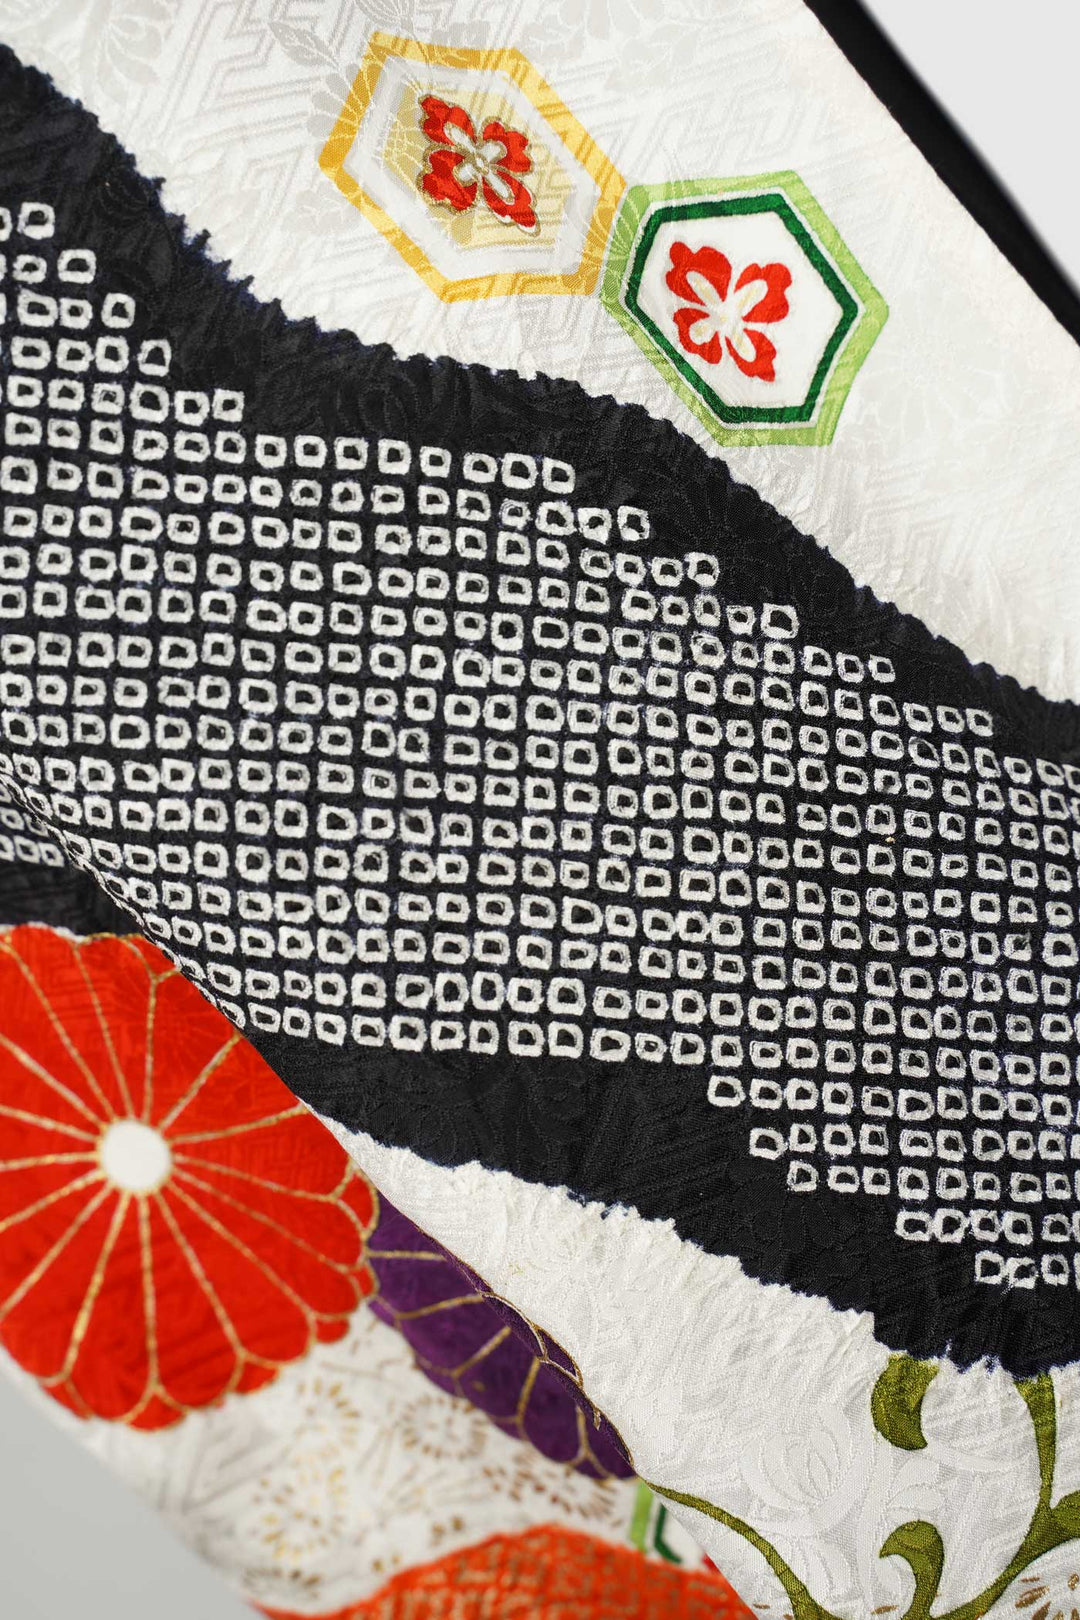 Palazzo Paperbag Waist Silk & Shibori Silk Pants | Chou